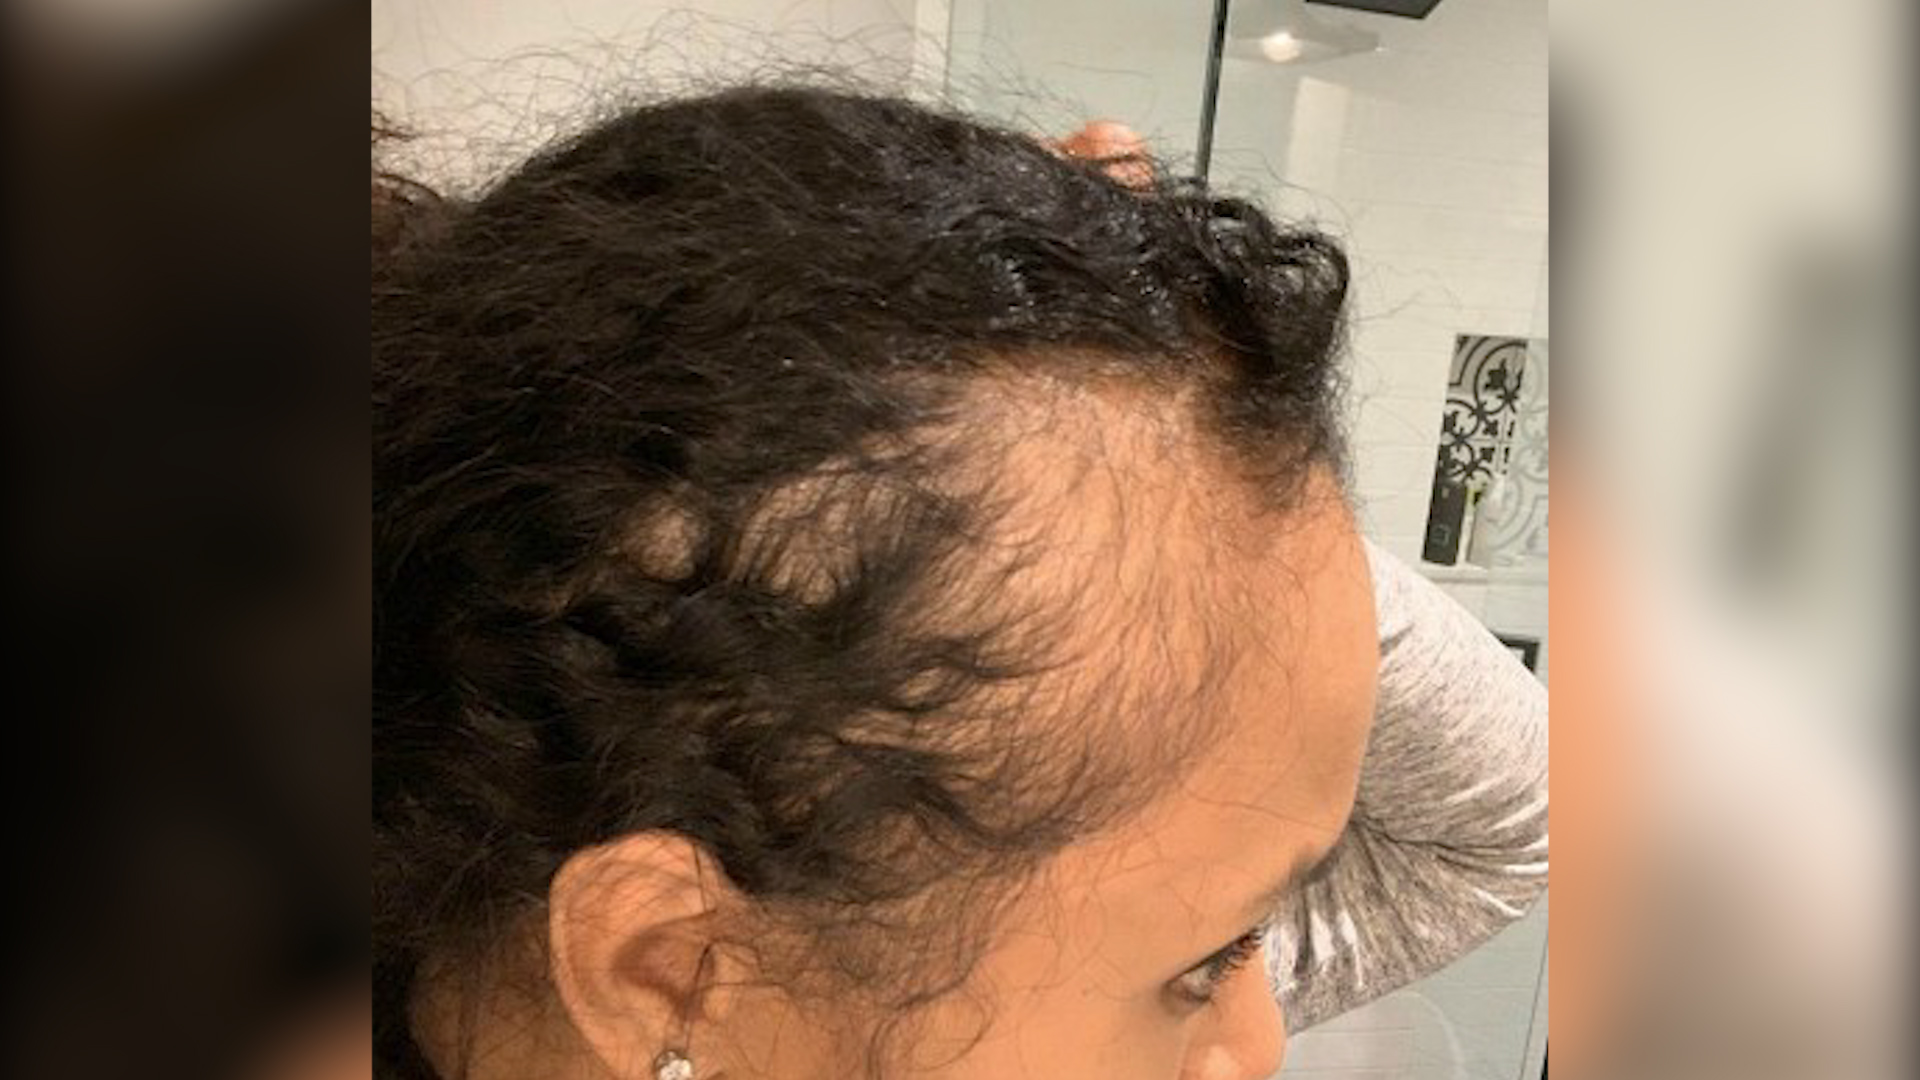 DevaCurl customers say product causes hair loss: 'It's devastating' -  National 